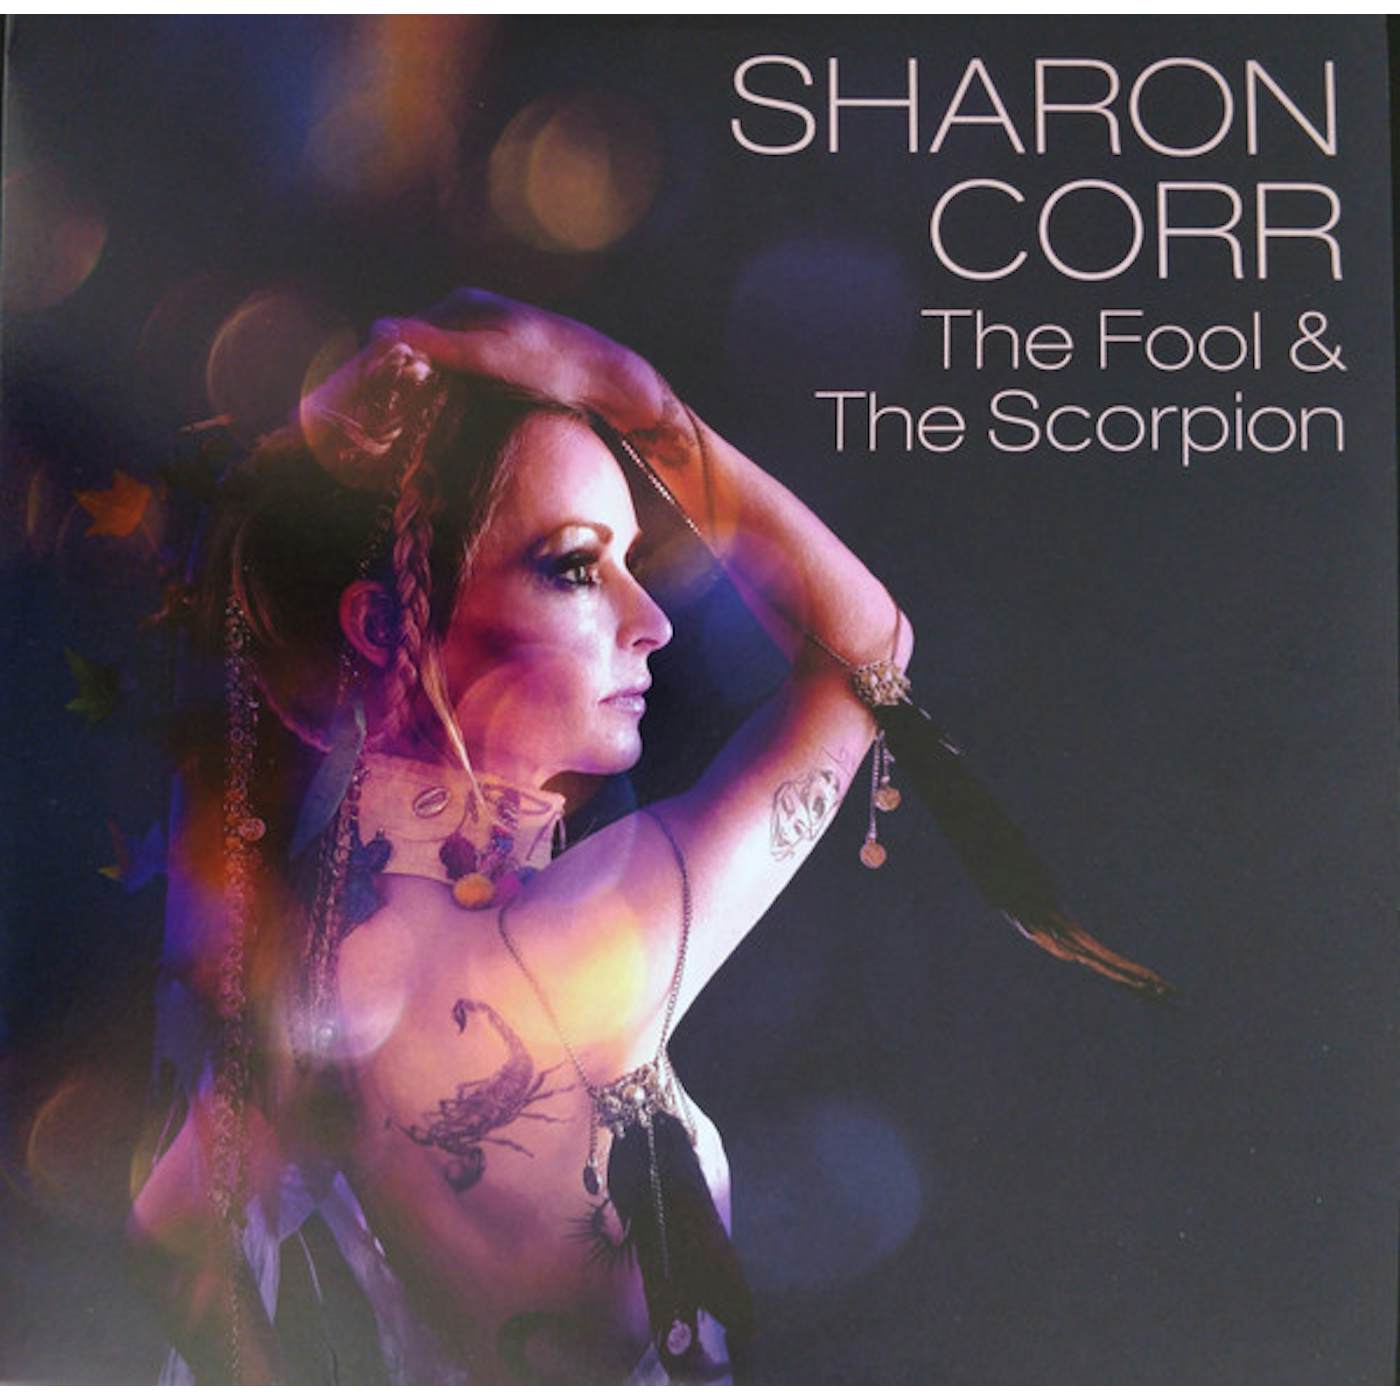 Sharon Corr FOOL & THE SCORPION Vinyl Record